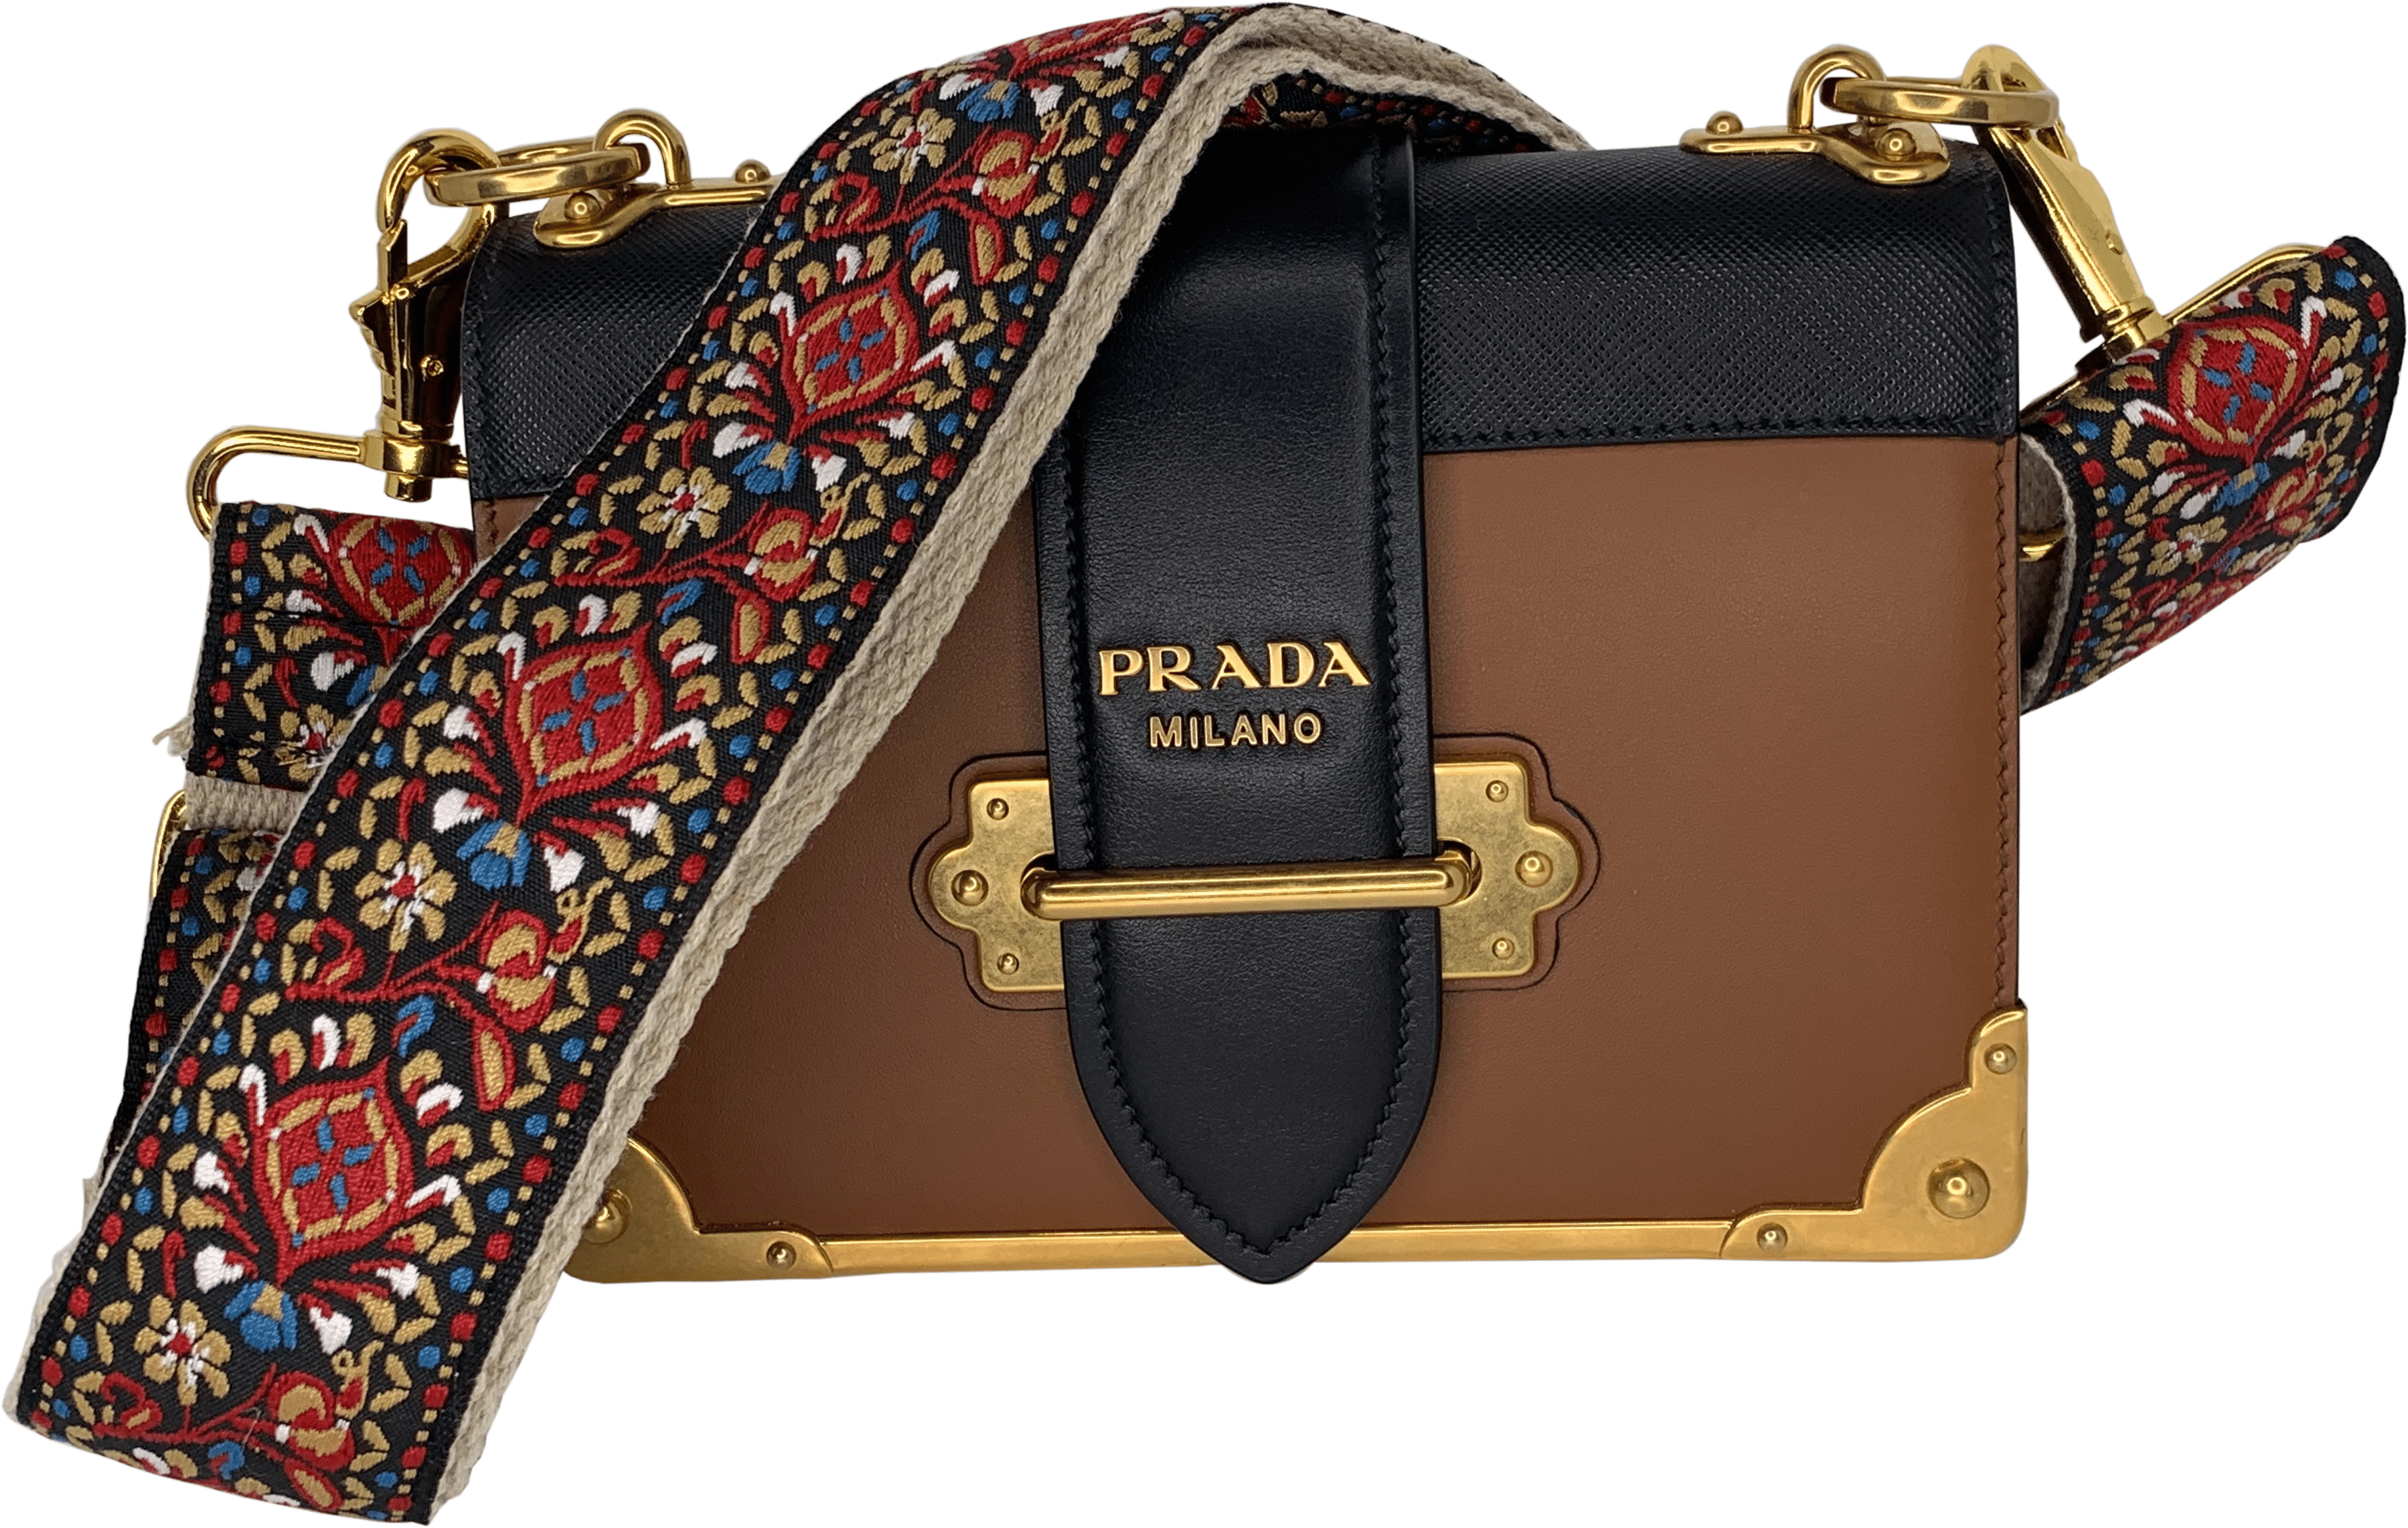 Handbag Straps - Leather, Vintage and Woven Replacement Handbag Straps -  Art Tribute